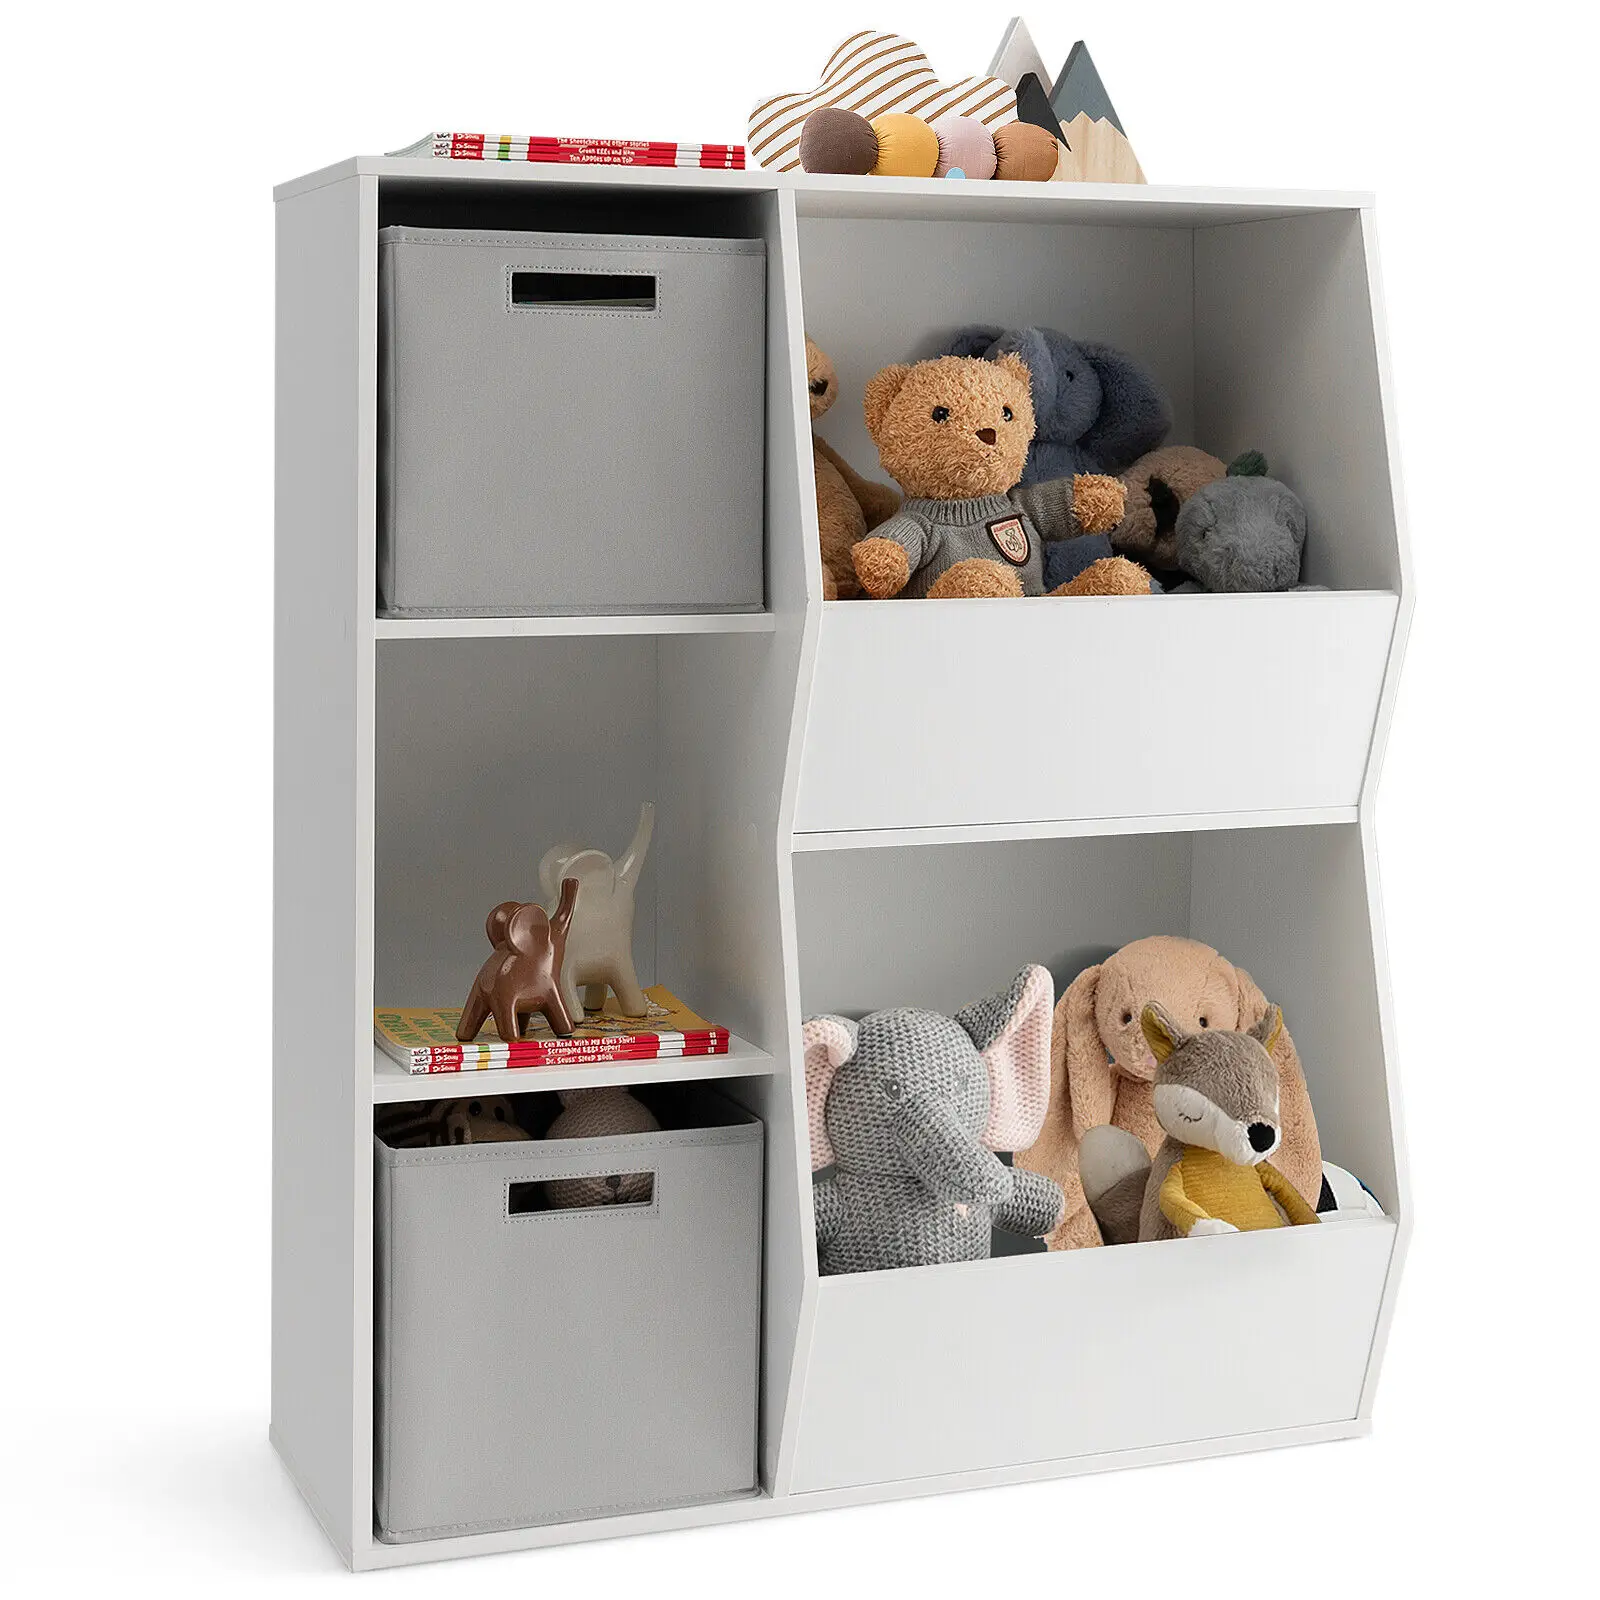 https://ae01.alicdn.com/kf/S574e5b57ebb649f399bb84054e3baf4ad/Costway-Kids-Toy-Storage-Organizer-5-Cubbies-Wooden-Bookshelf-Display-Cabinet-w-Drawers.jpg